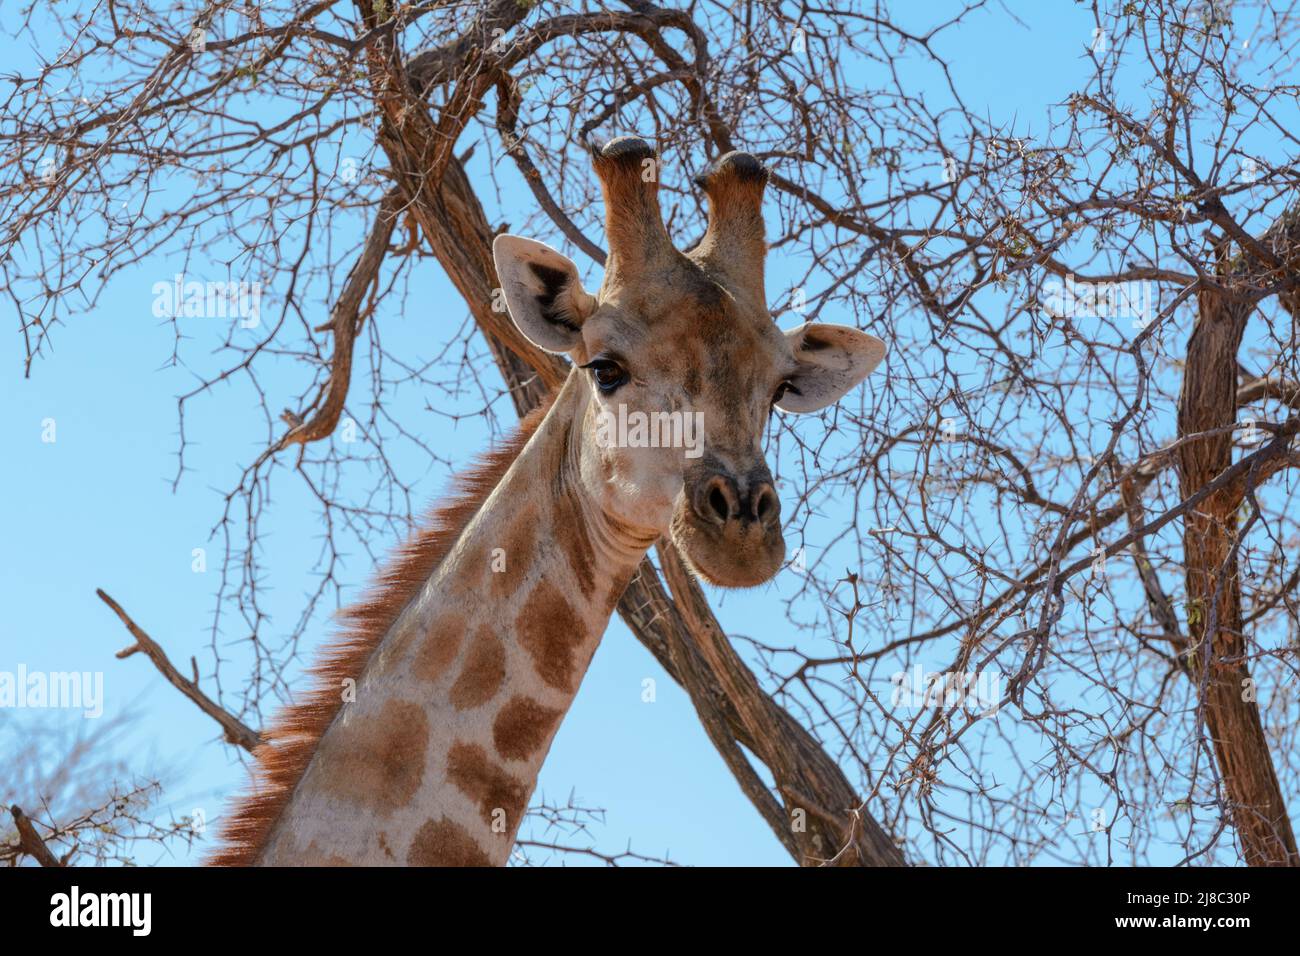 Jirafa angoleña (Giraffa camelopardalis angolensis o Giraffa giraffa angolensis), también conocida como jirafa namibiana, Namibia, África sudoccidental Foto de stock